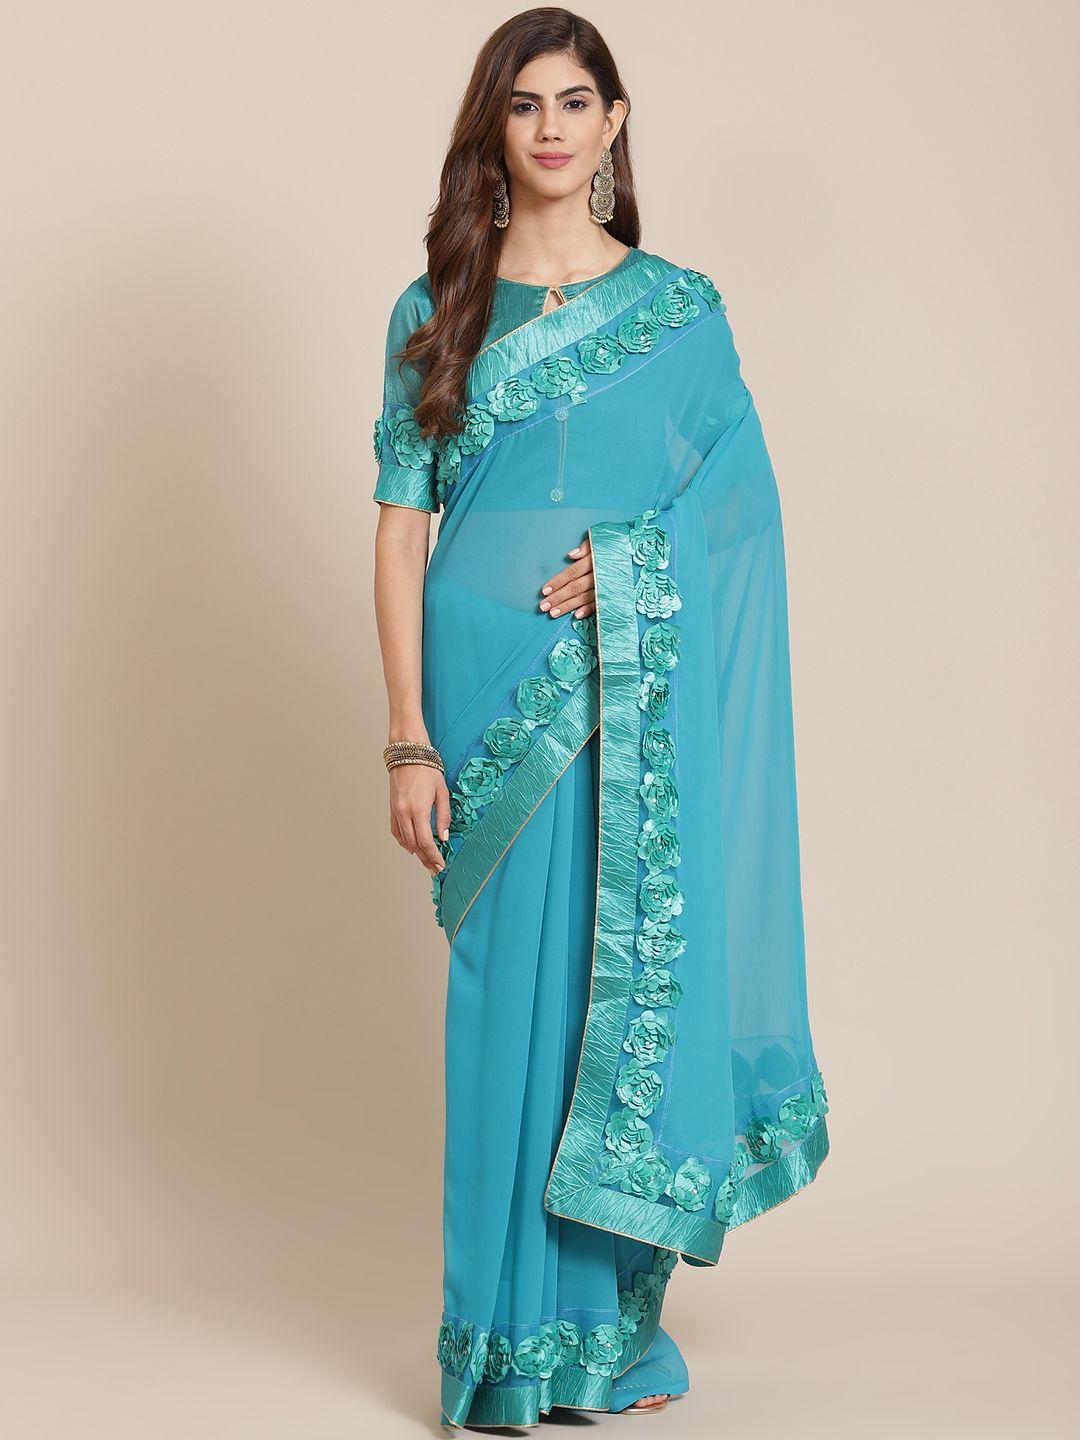 serona-fabrics-turquoise-blue-embellished-pure-georgette-saree